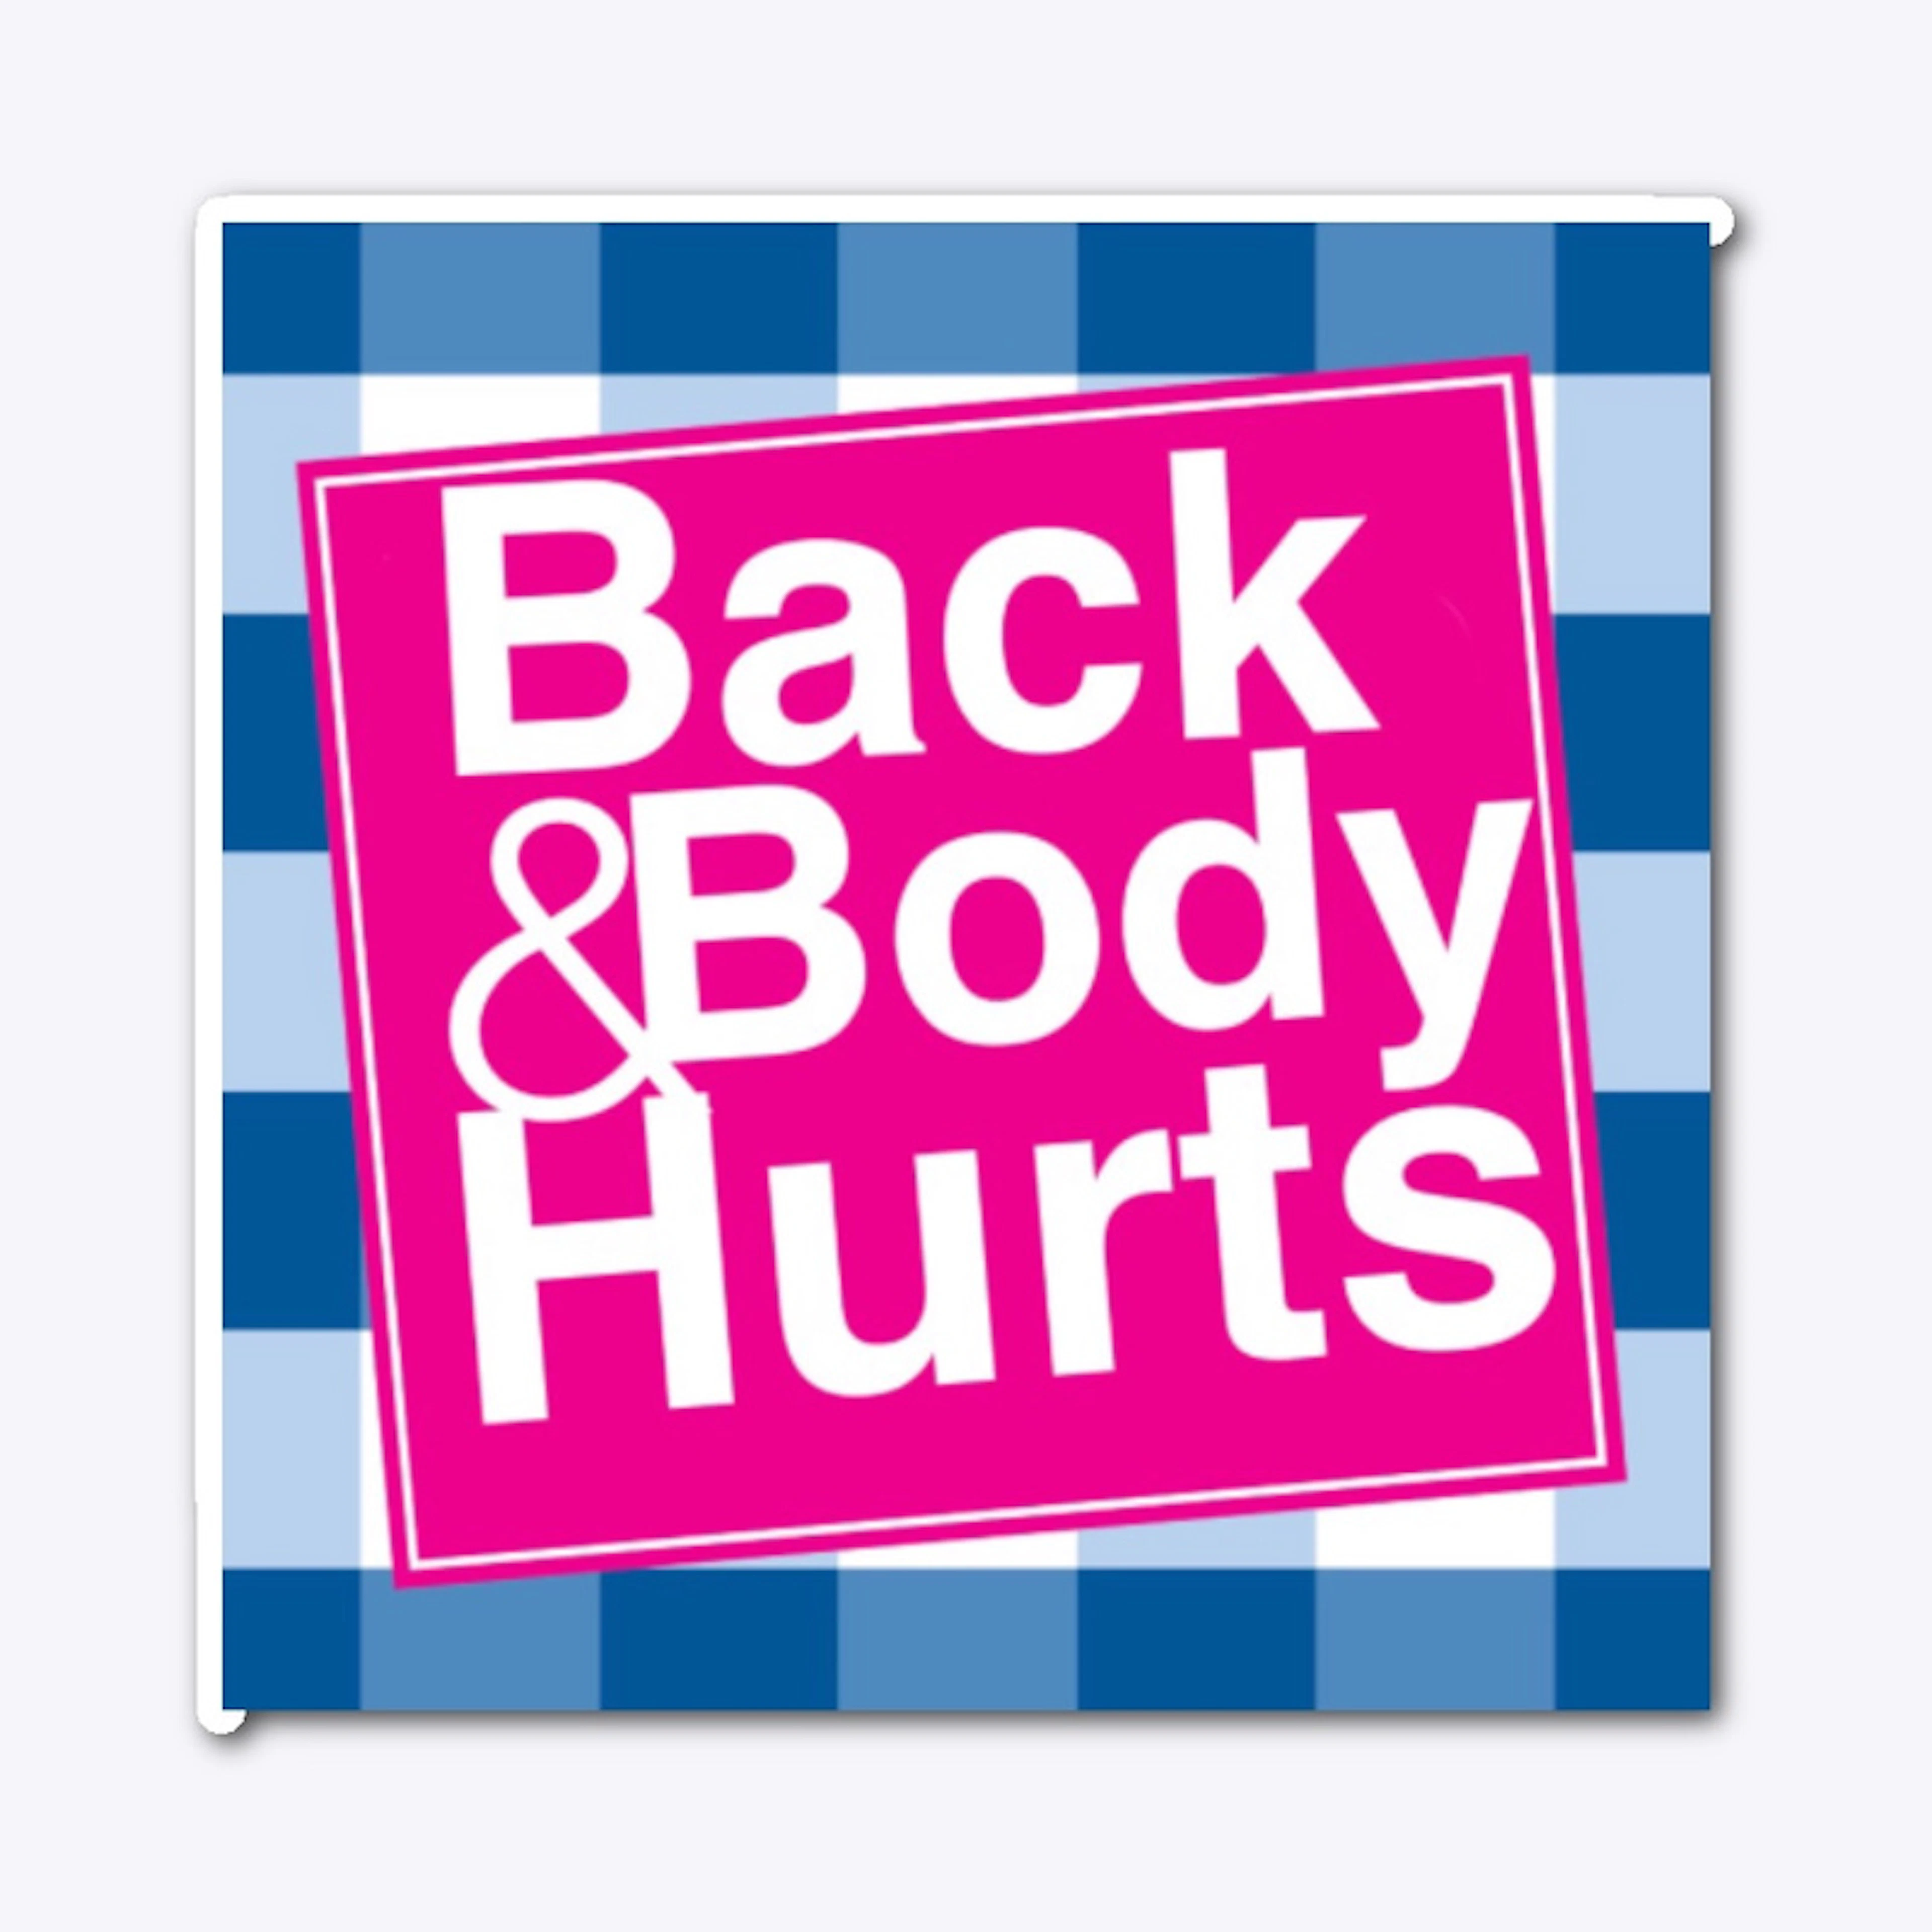 Back & Body Hurts 